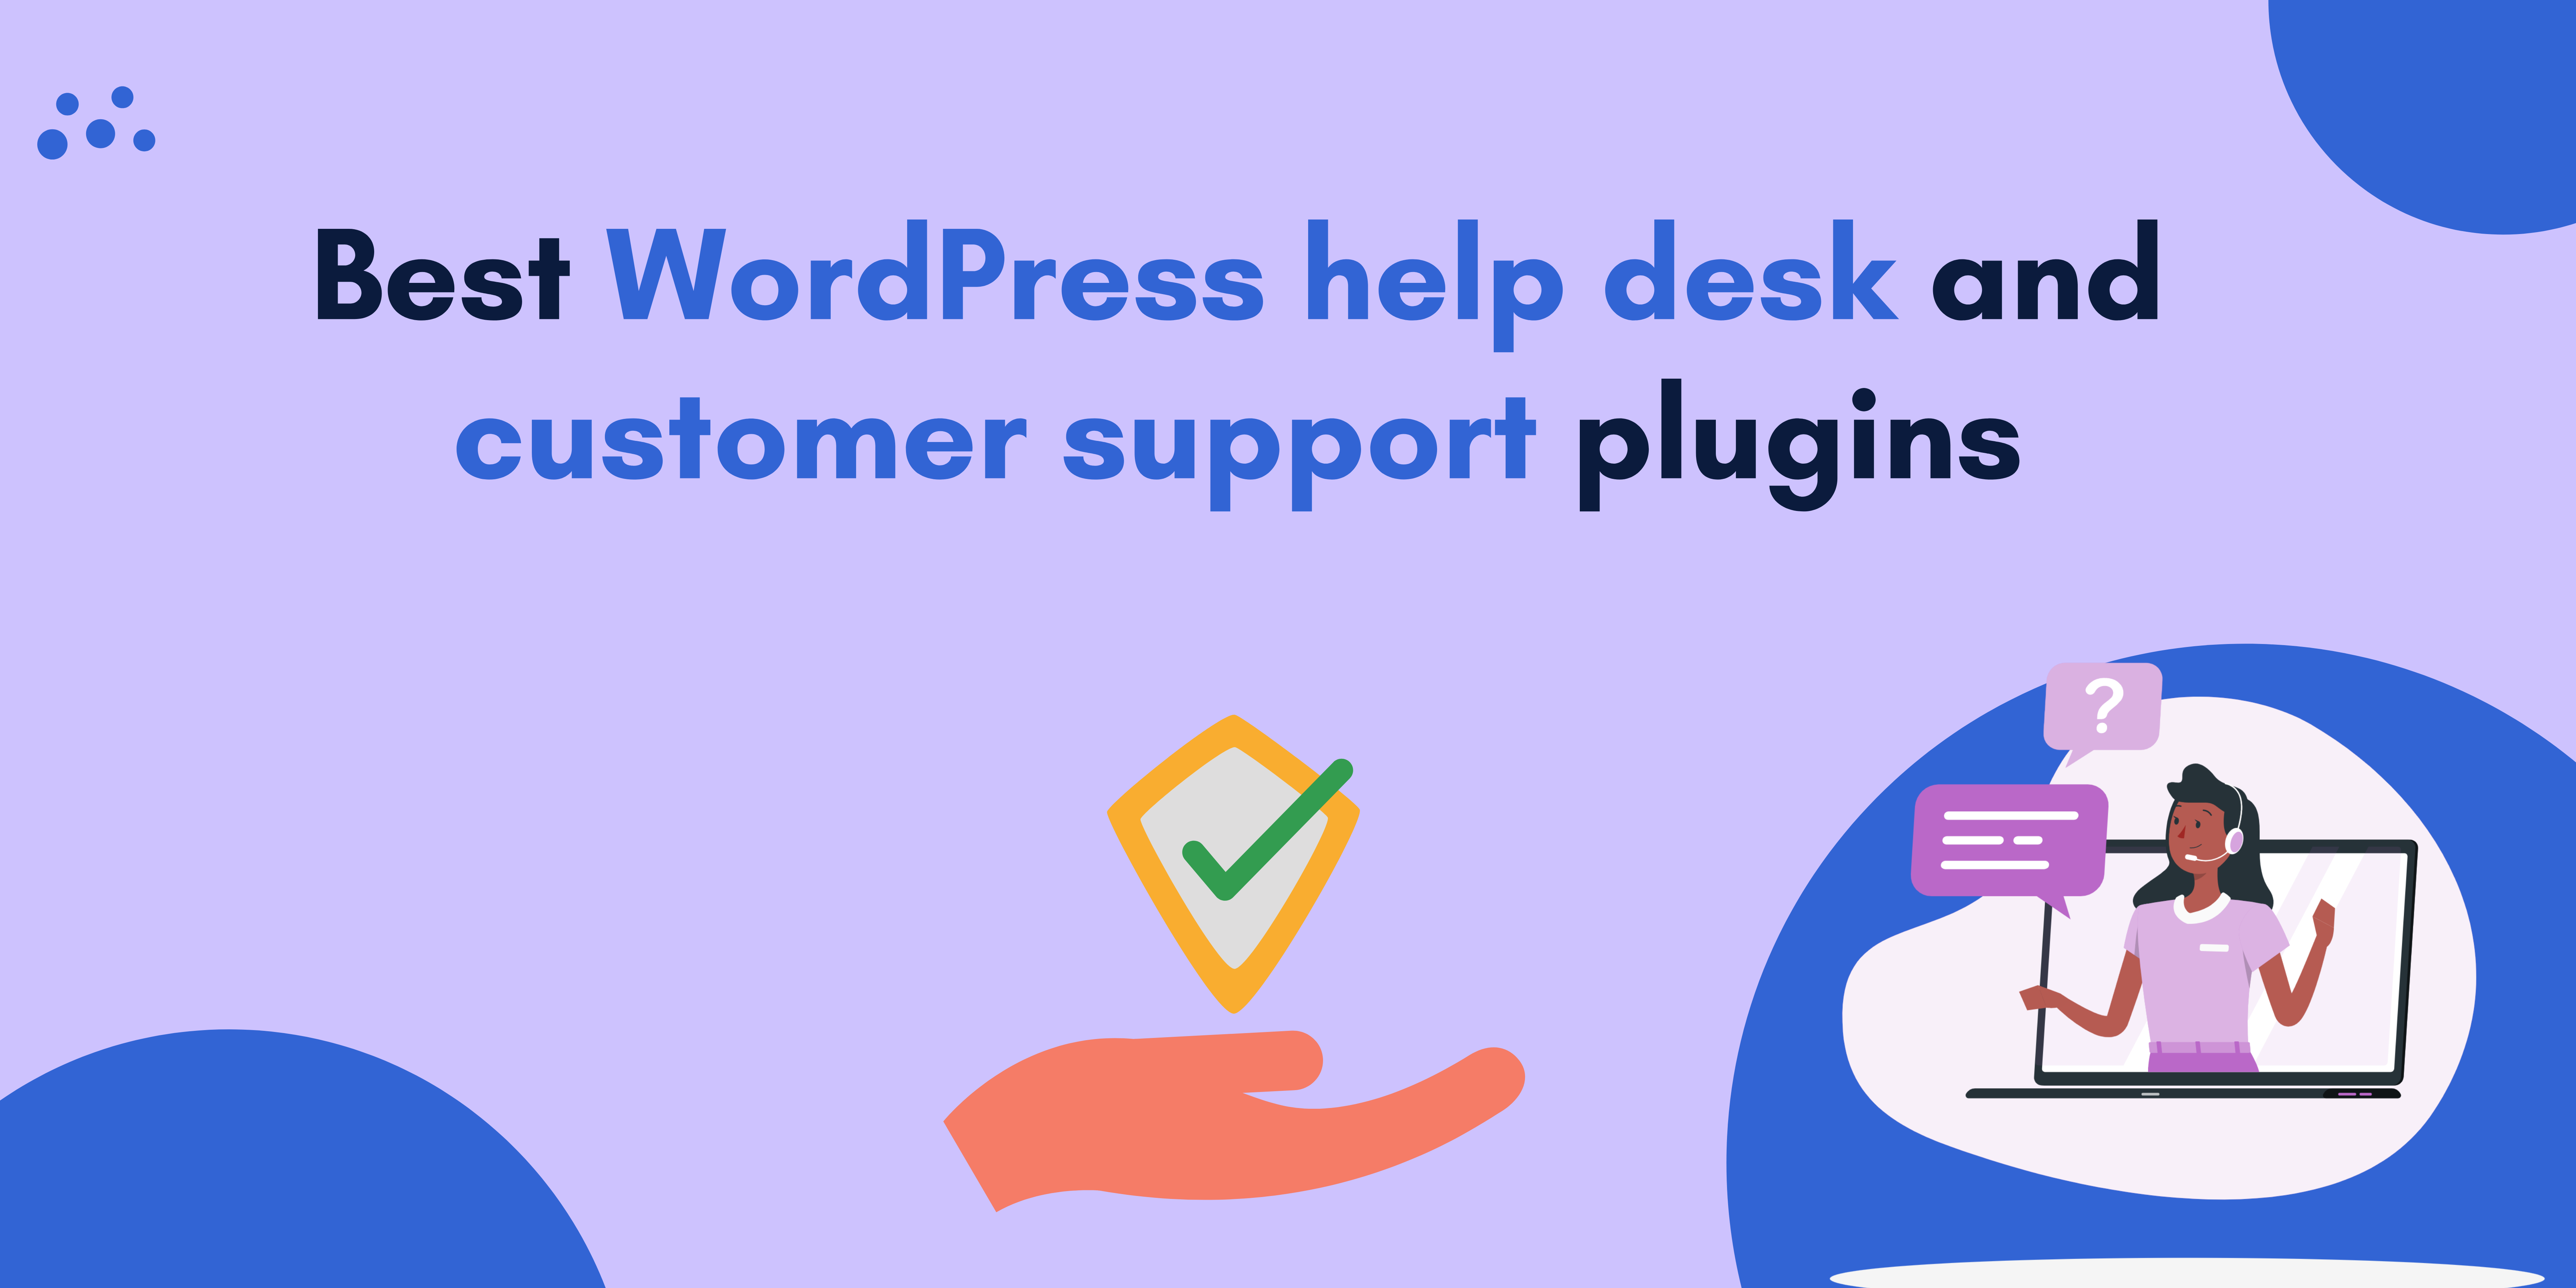 WordPress customer support plugins